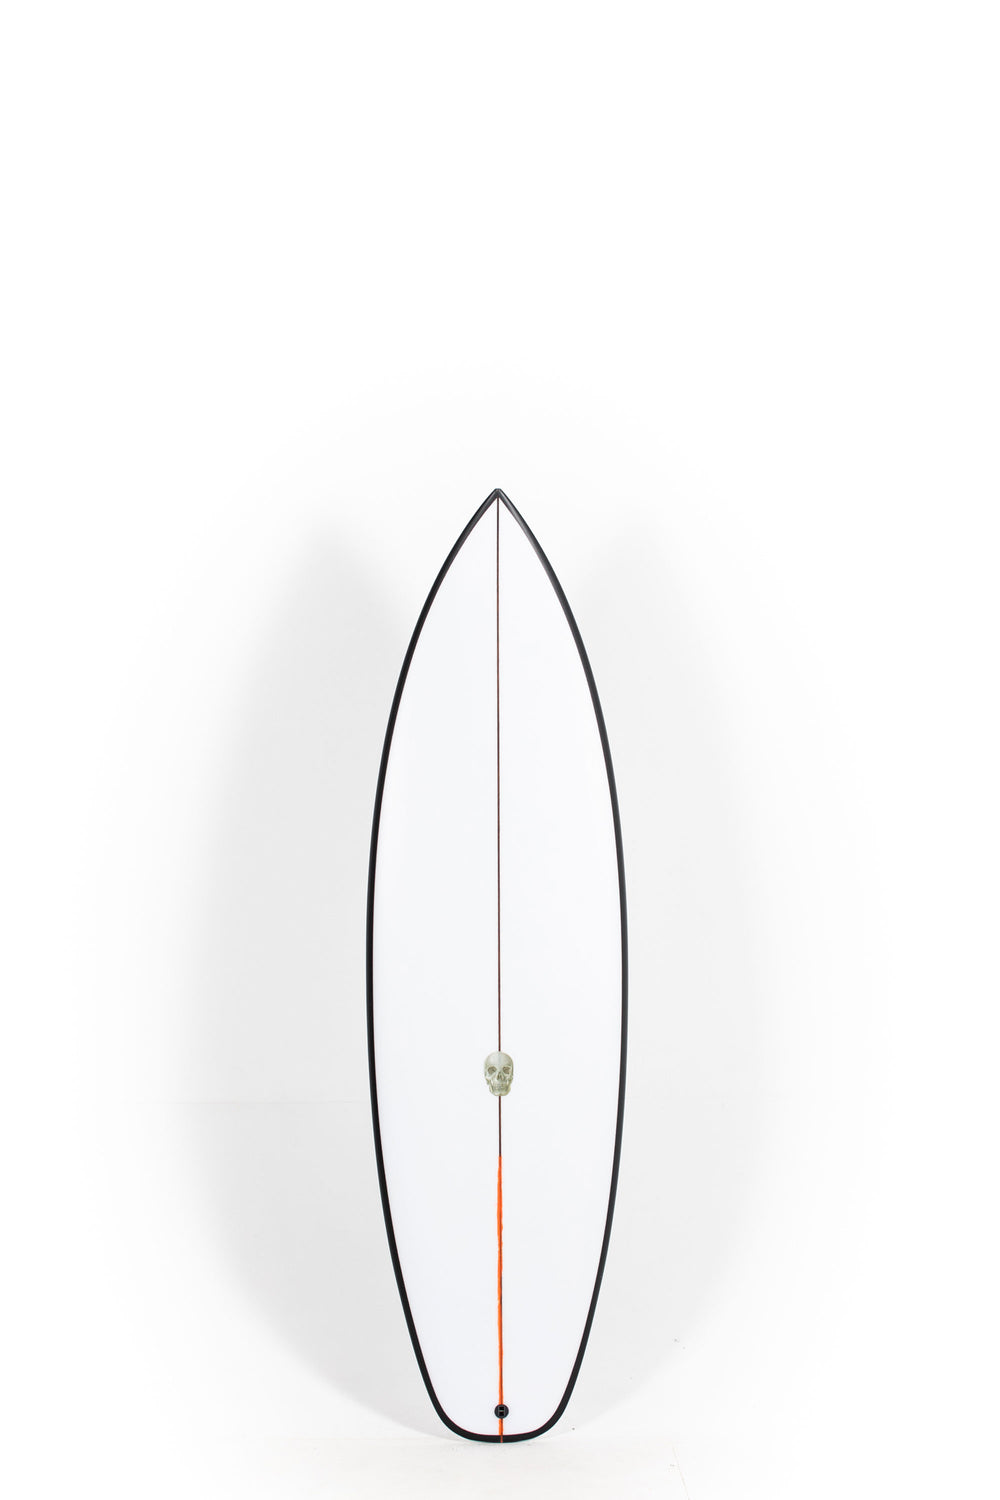 Pukas Surf Shop - Christenson Surfboards - OP1 - 5'11